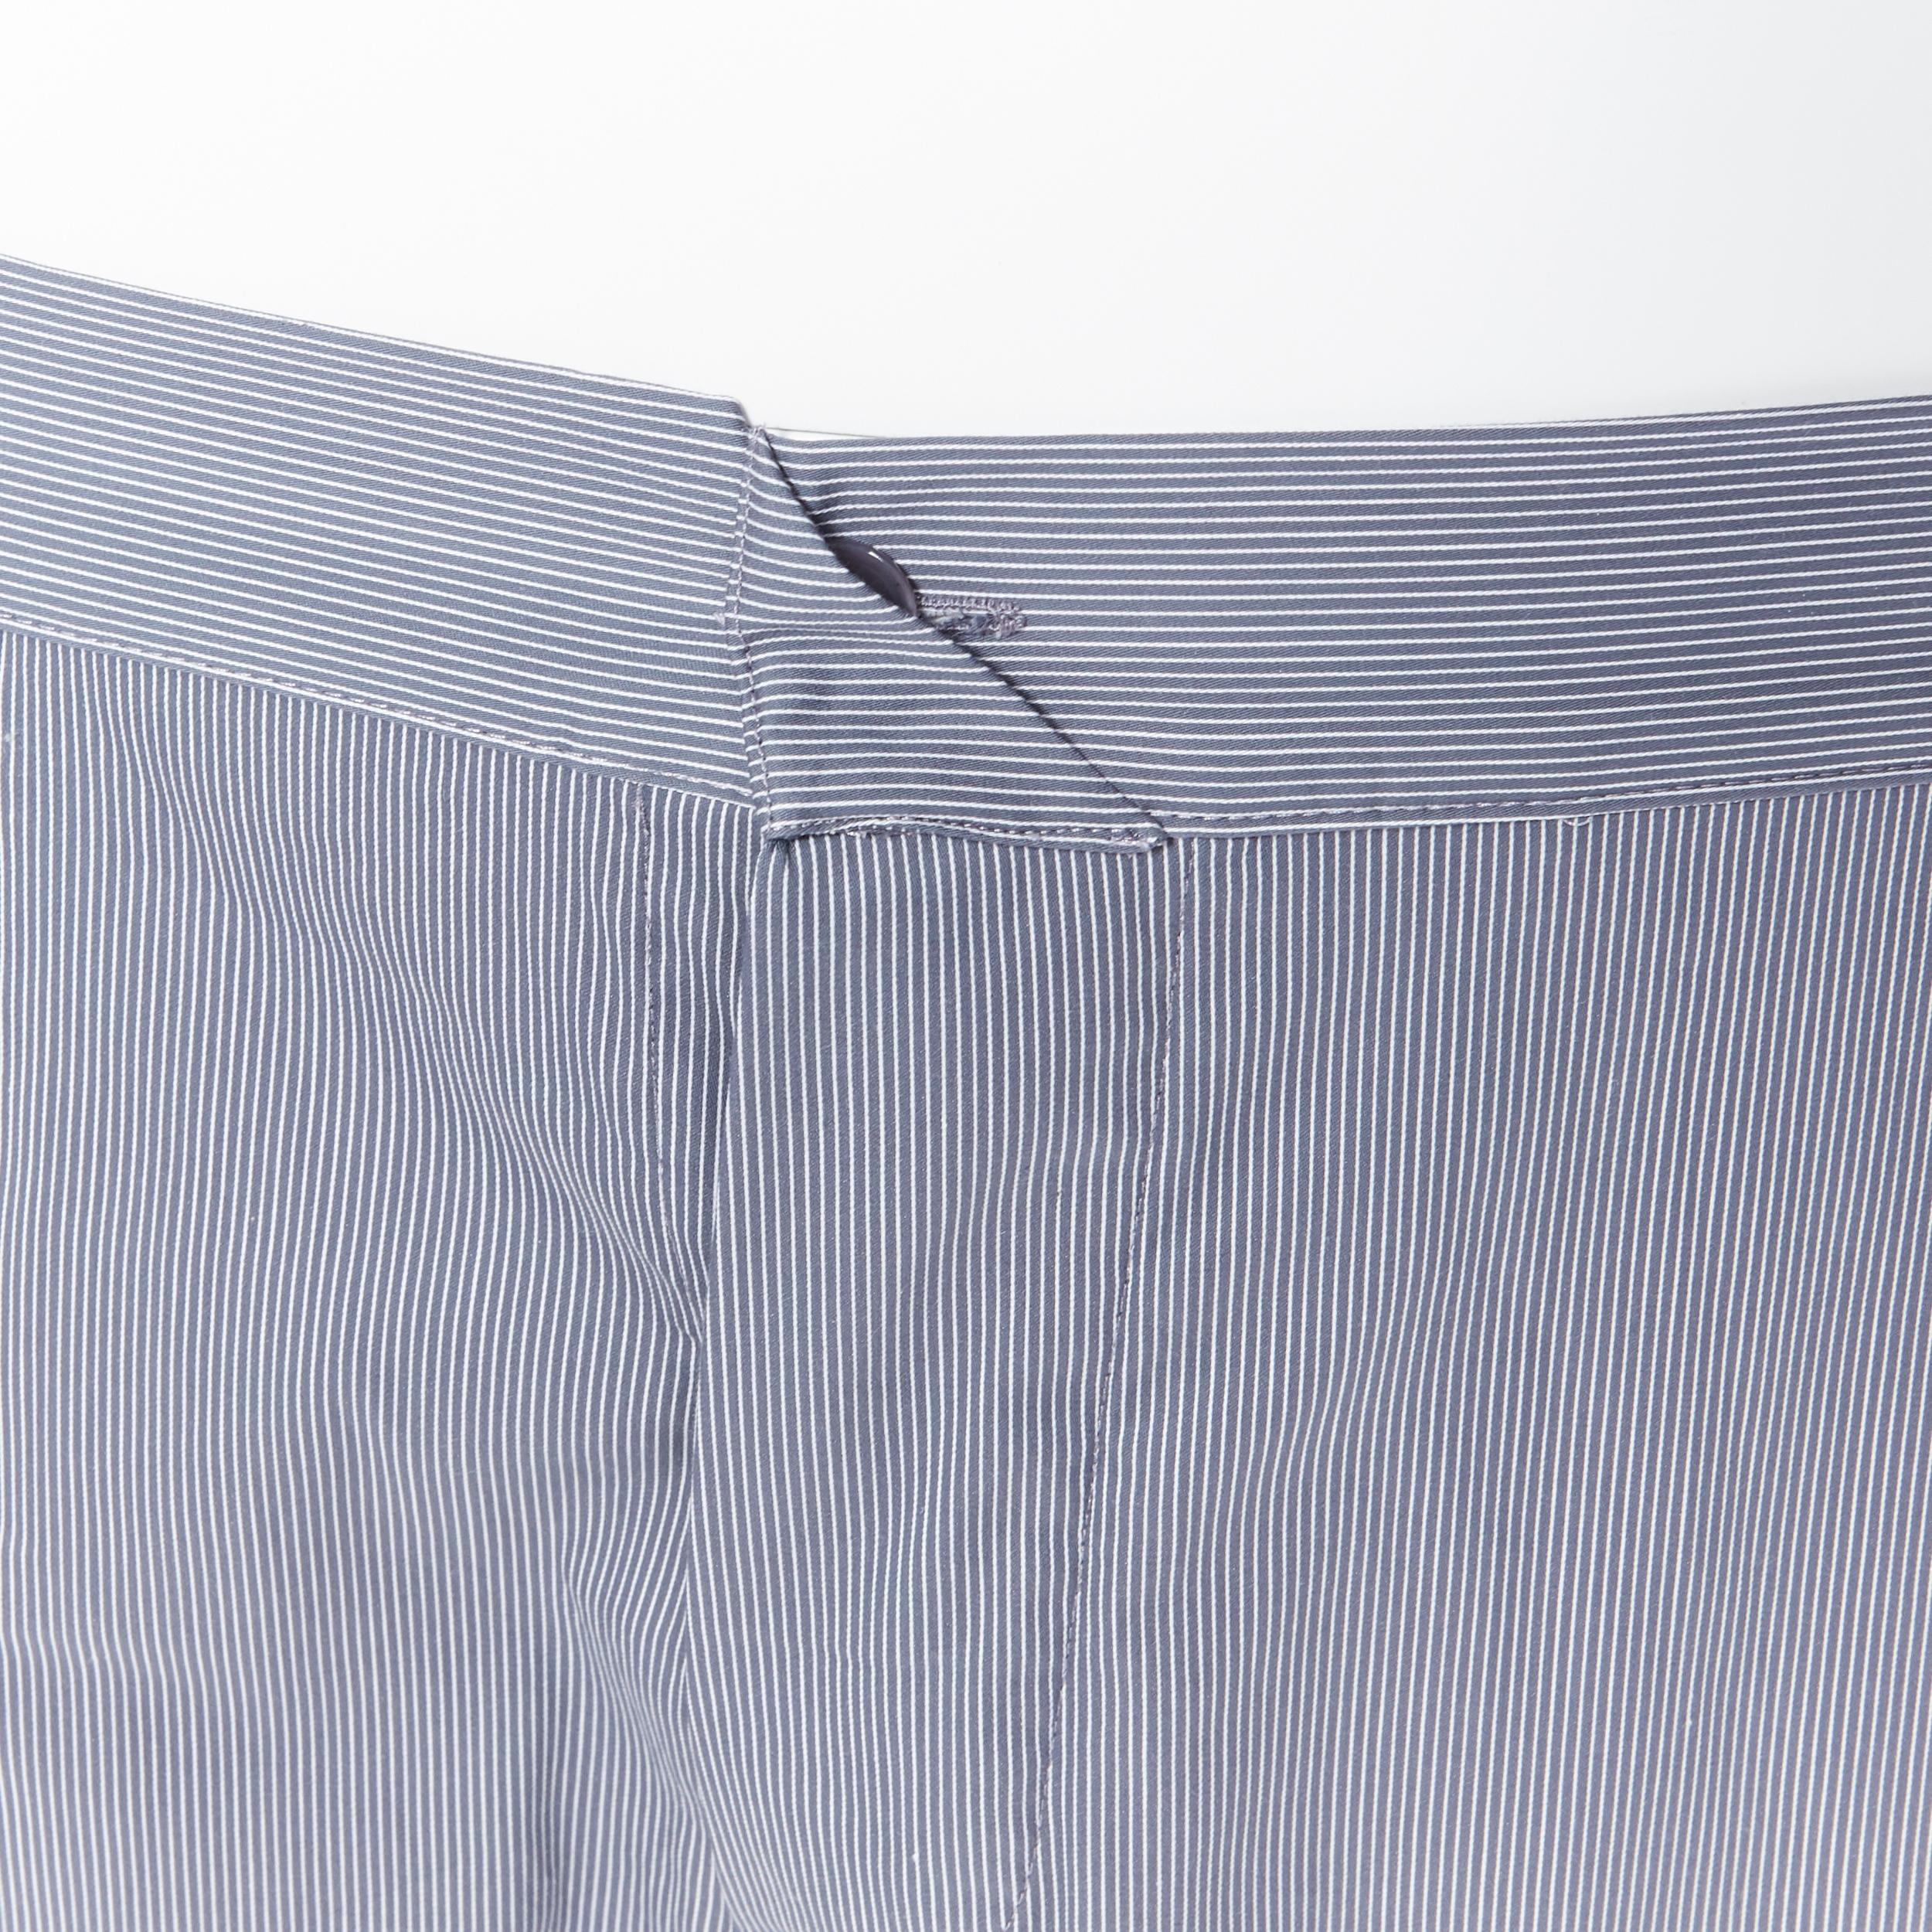 new LA PERLA grey stripe cotton blend notched collar pyjama set pants M 3